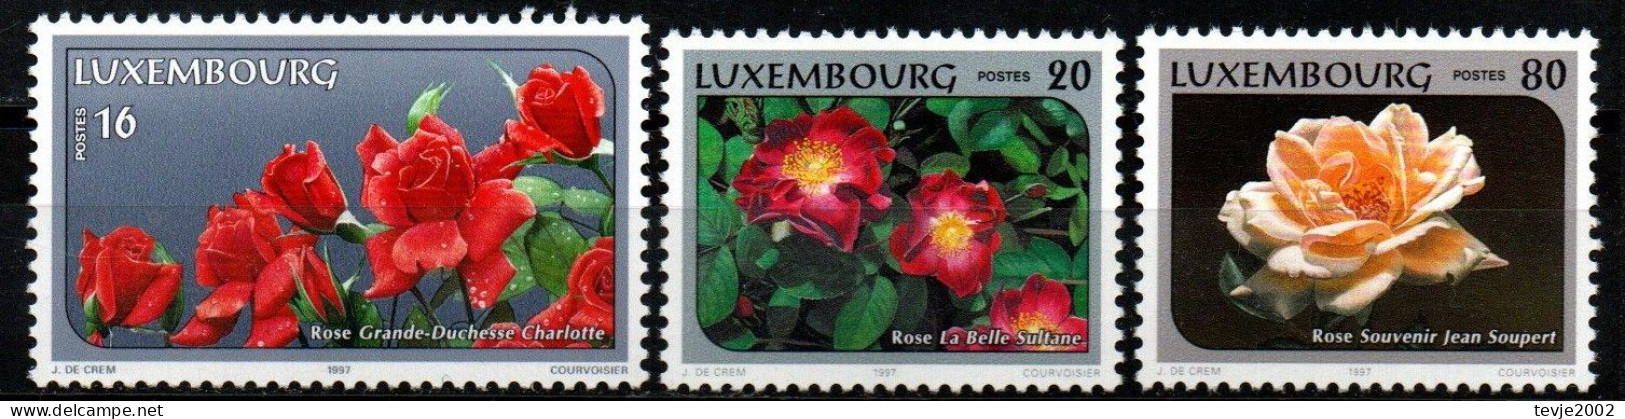 Luxemburg 1997 - Mi.Nr. 1411 - 1413 - Postfrisch MNH - Blumen Flowers Rosen Roses - Roses